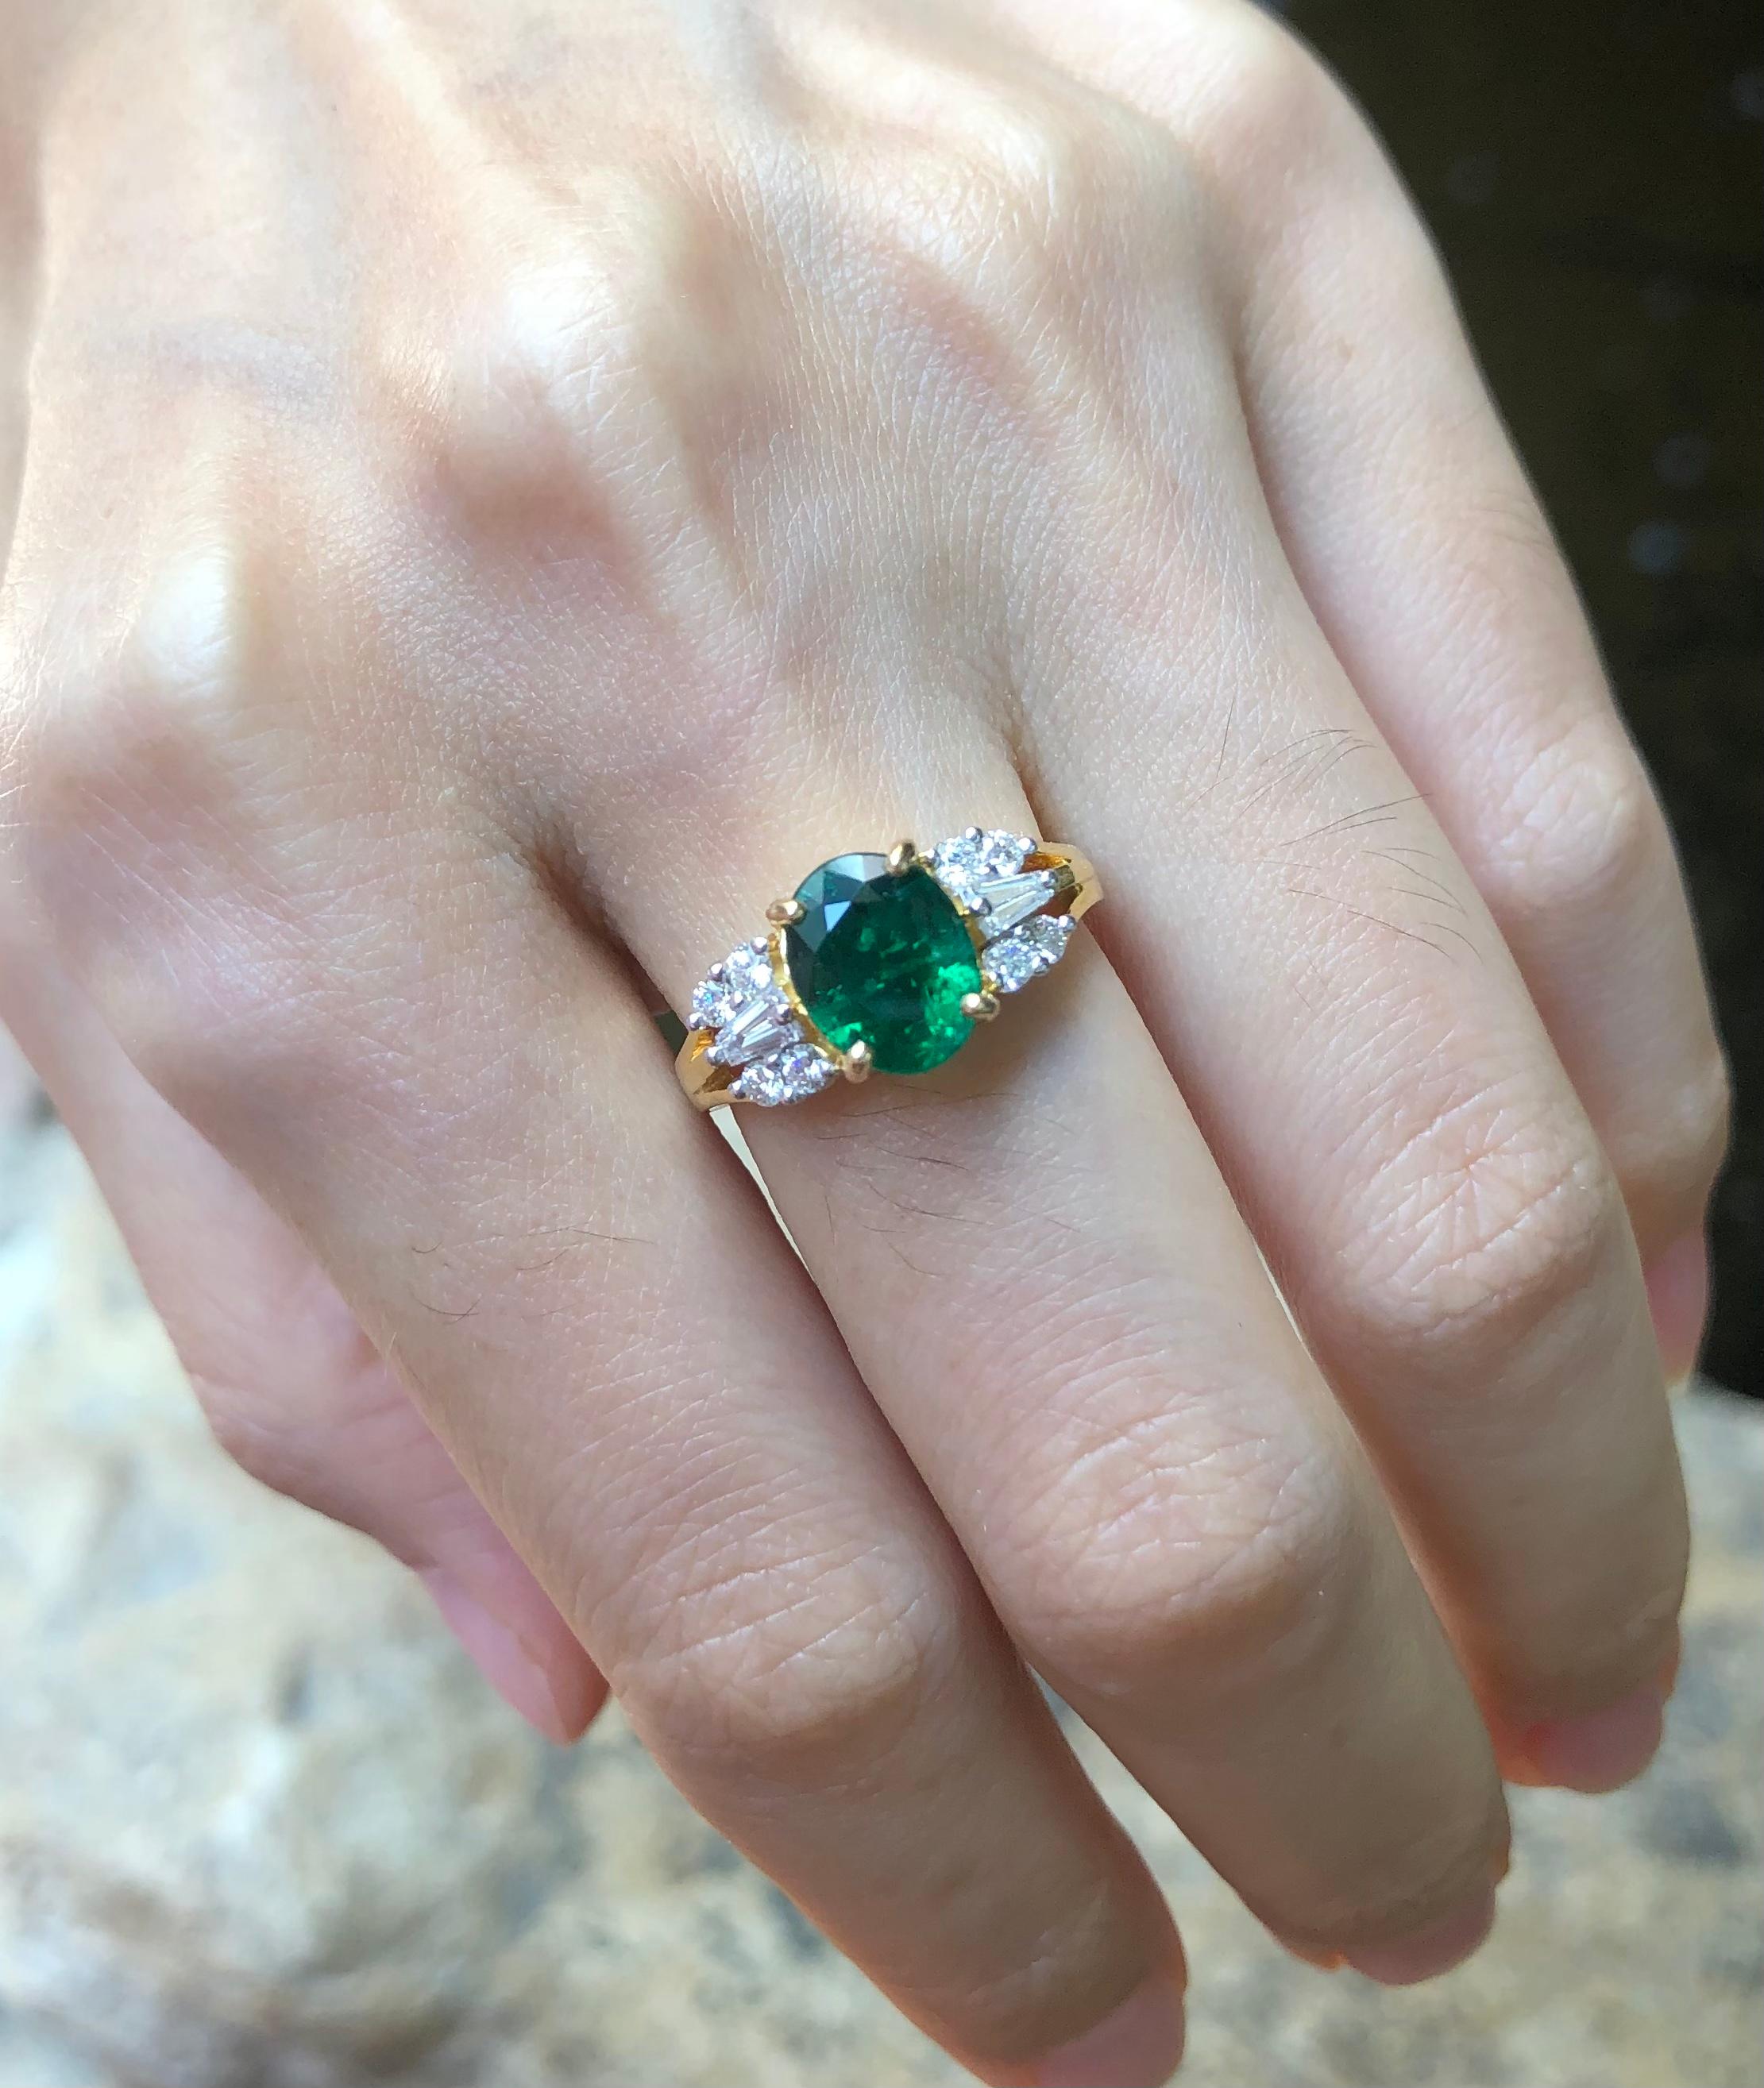 Emerald 1.32 carats with Diamond 0.35 carat Ring set in 18 Karat Gold Settings

Width:  1.6 cm 
Length:  0.9 cm
Ring Size: 51
Total Weight: 4.61 grams

Emerald
Width:  0.7 cm 
Length:  0.9 cm

